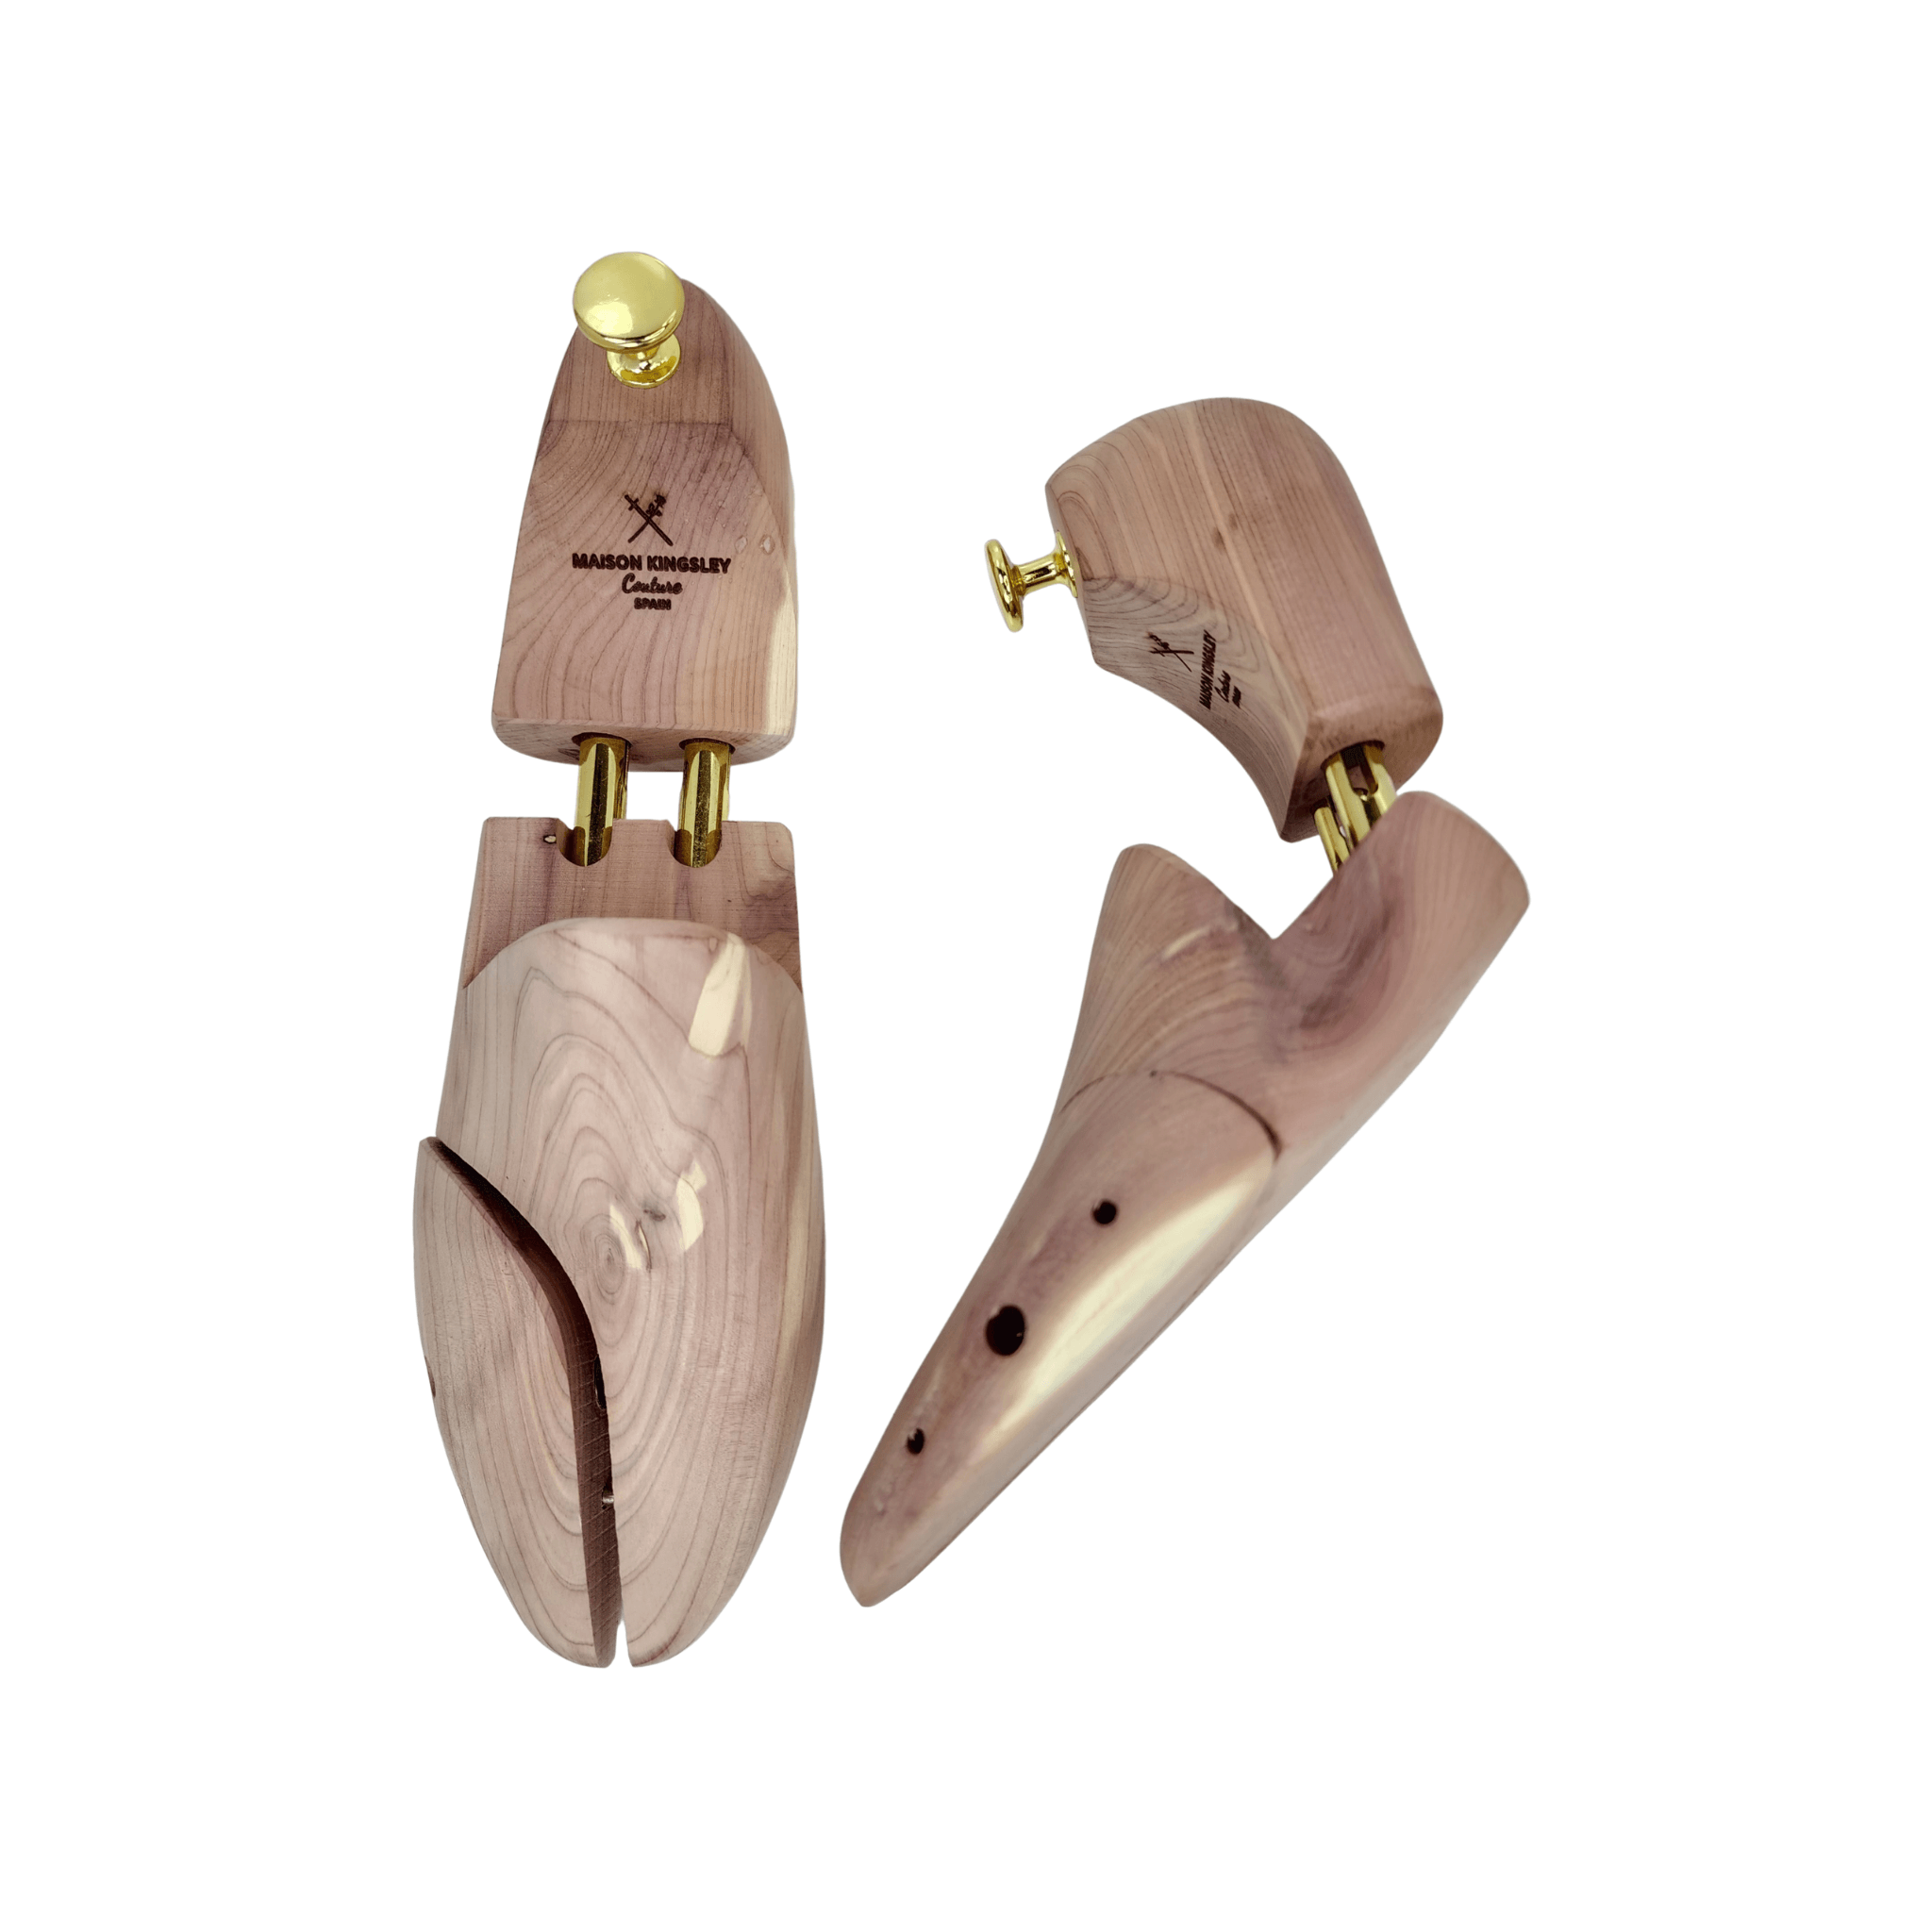 Skull and Cross Bones Wholecut Laser Engraved Chelsea Boots in Rosewood - Maison de Kingsley Couture Harmonie et Fureur Spain